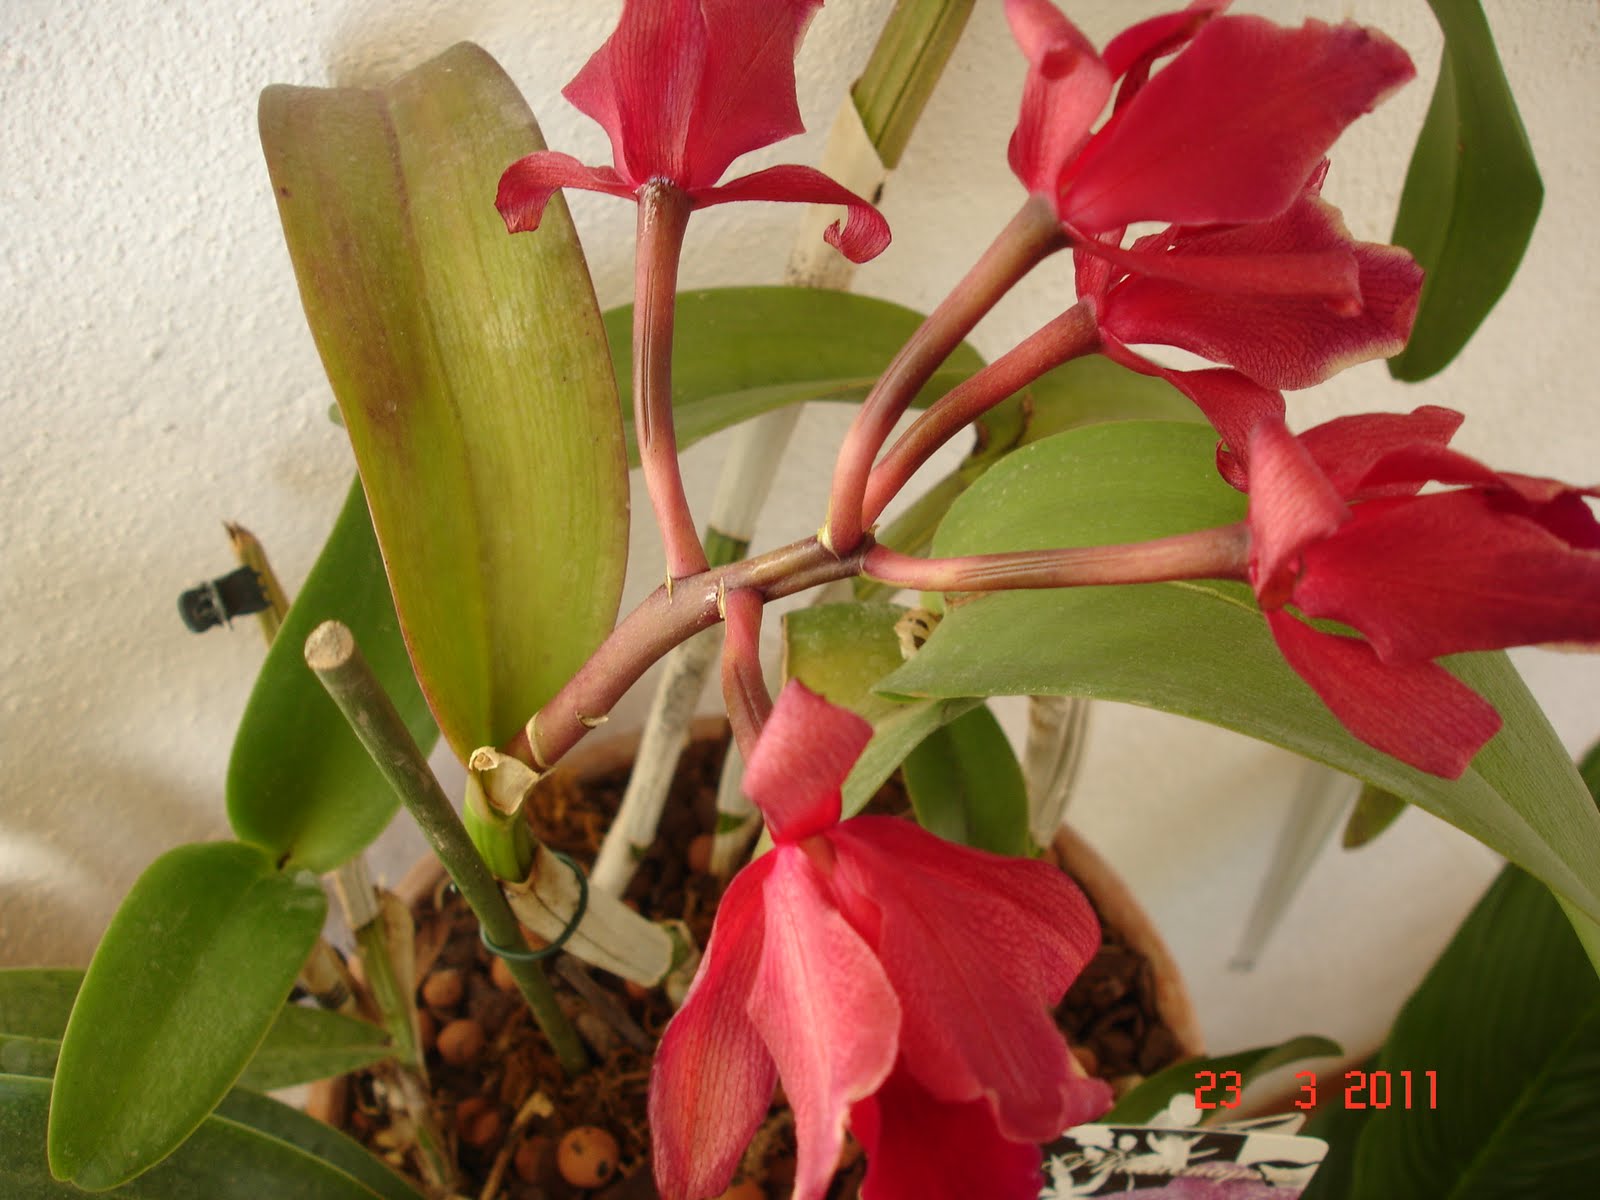 aventura com orquídeas: Cattleya vermelha híbrido